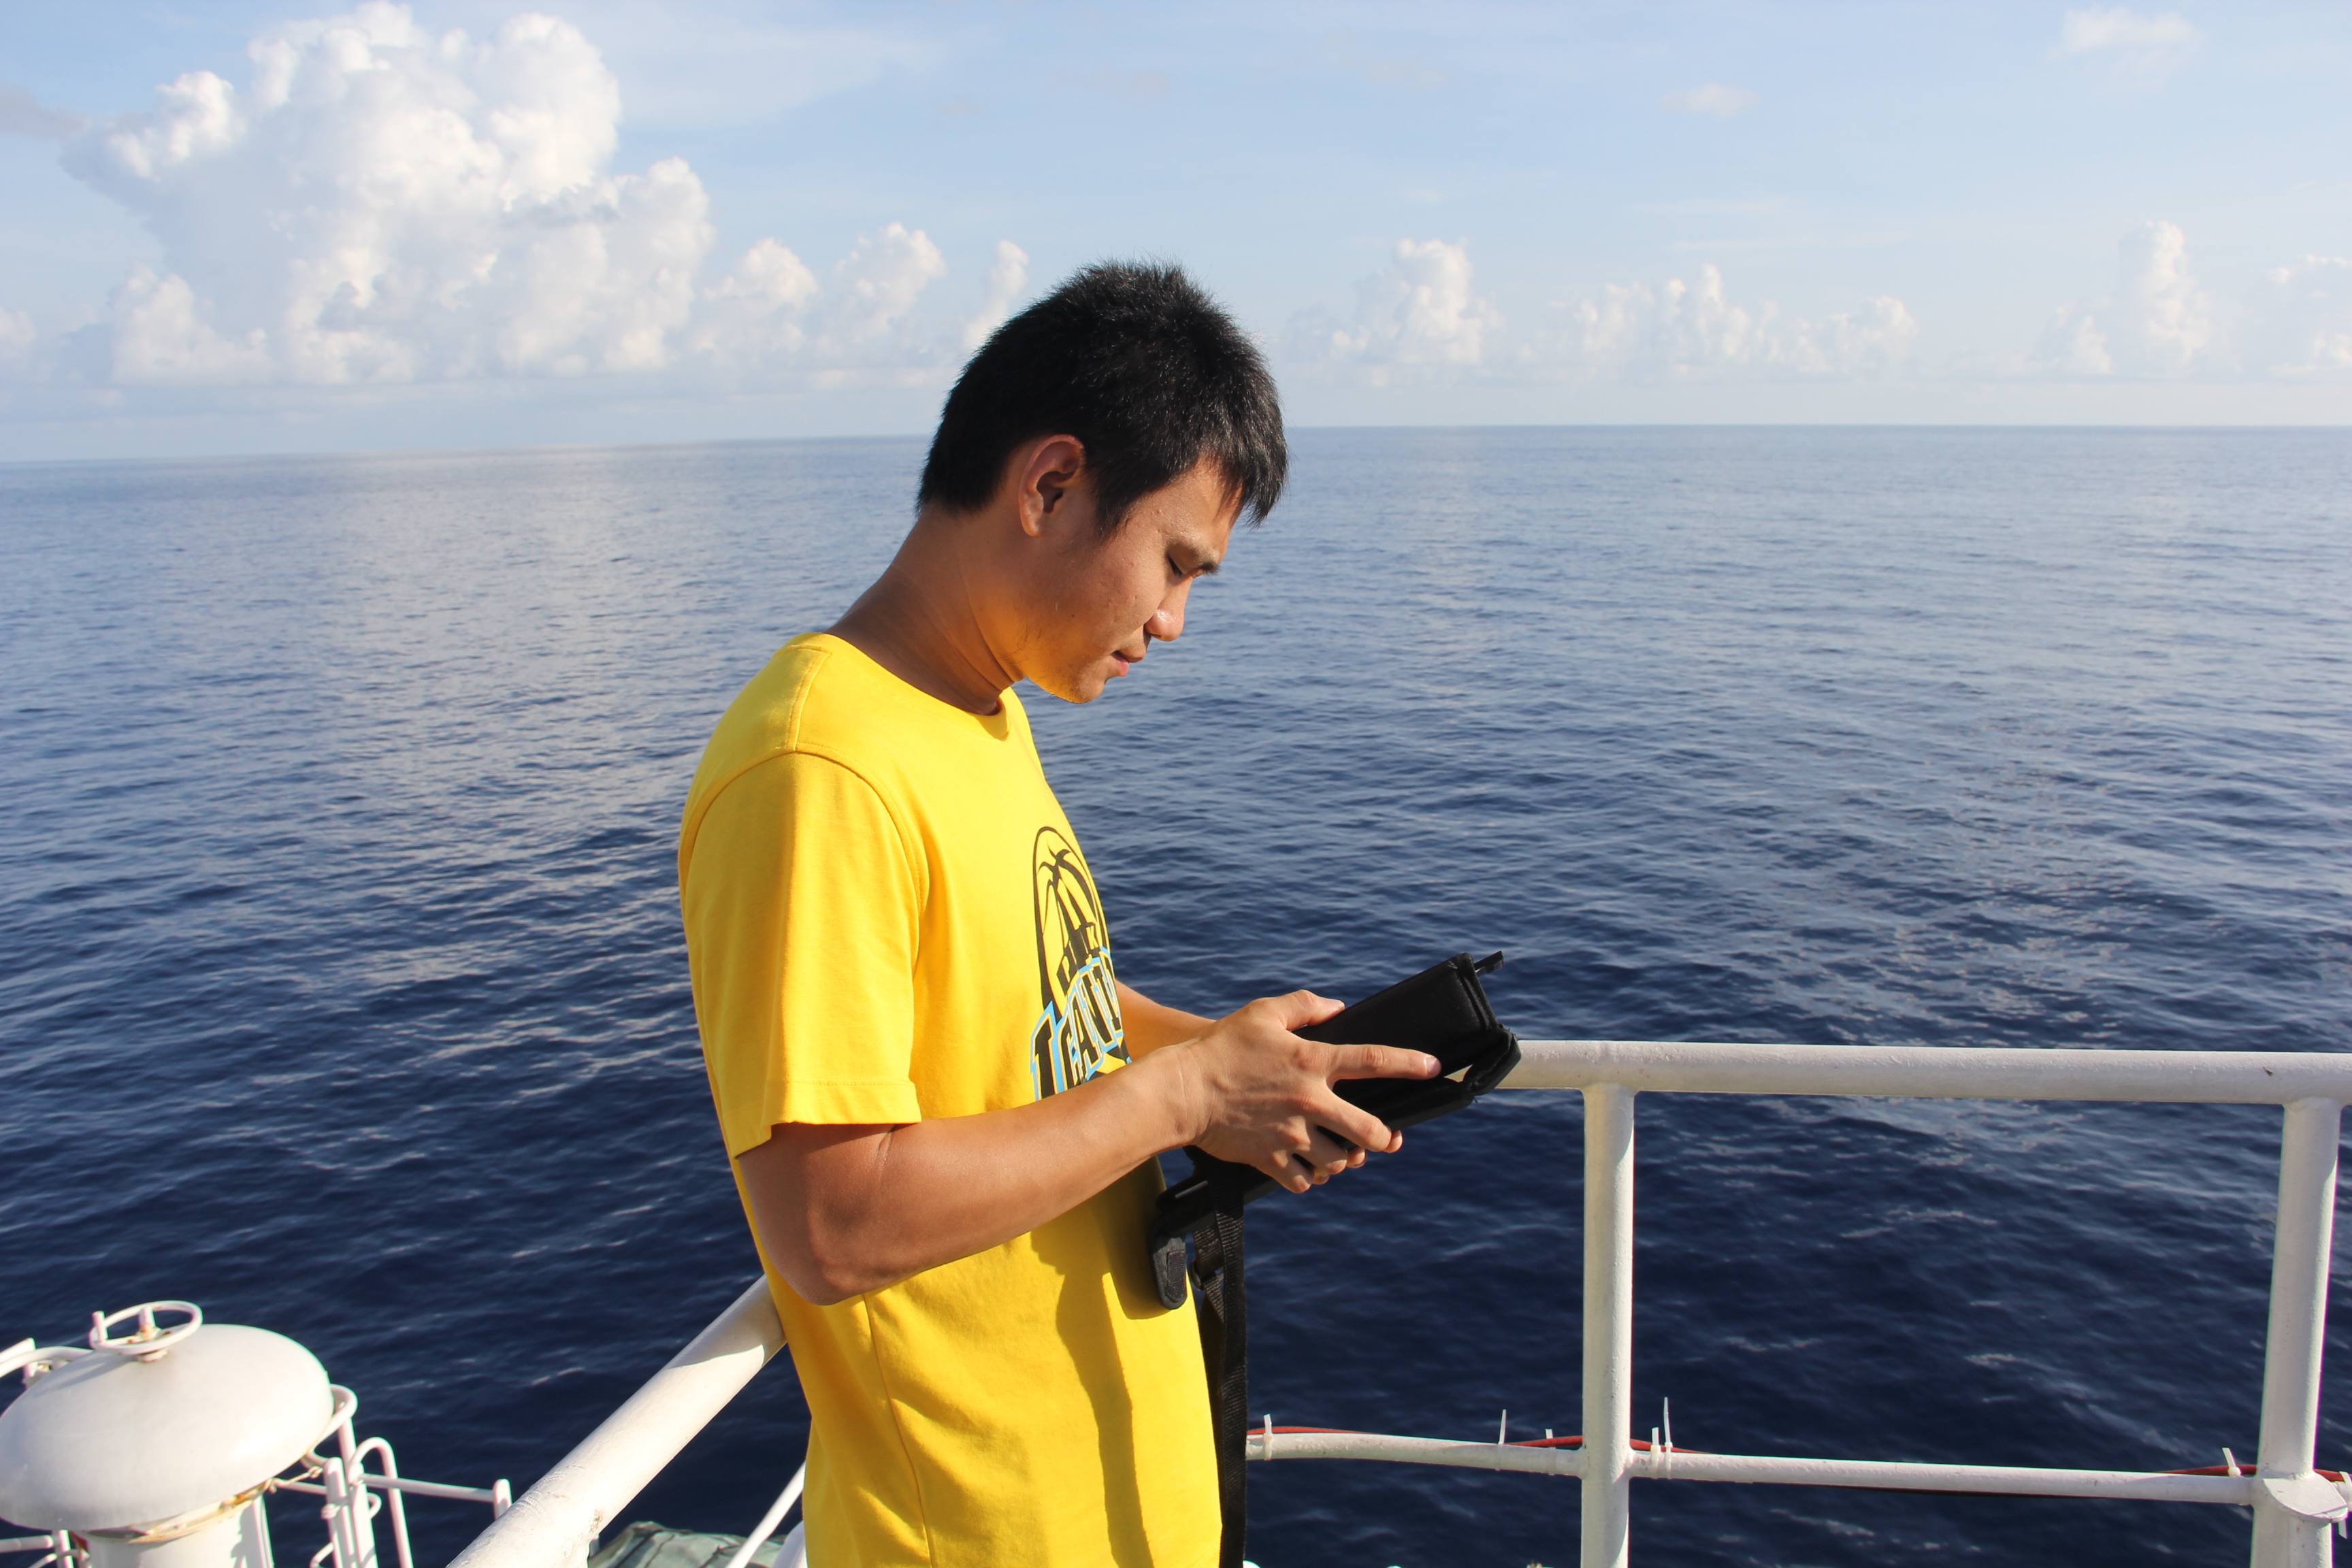 Measurements on board by Mr. Qingyang Sun